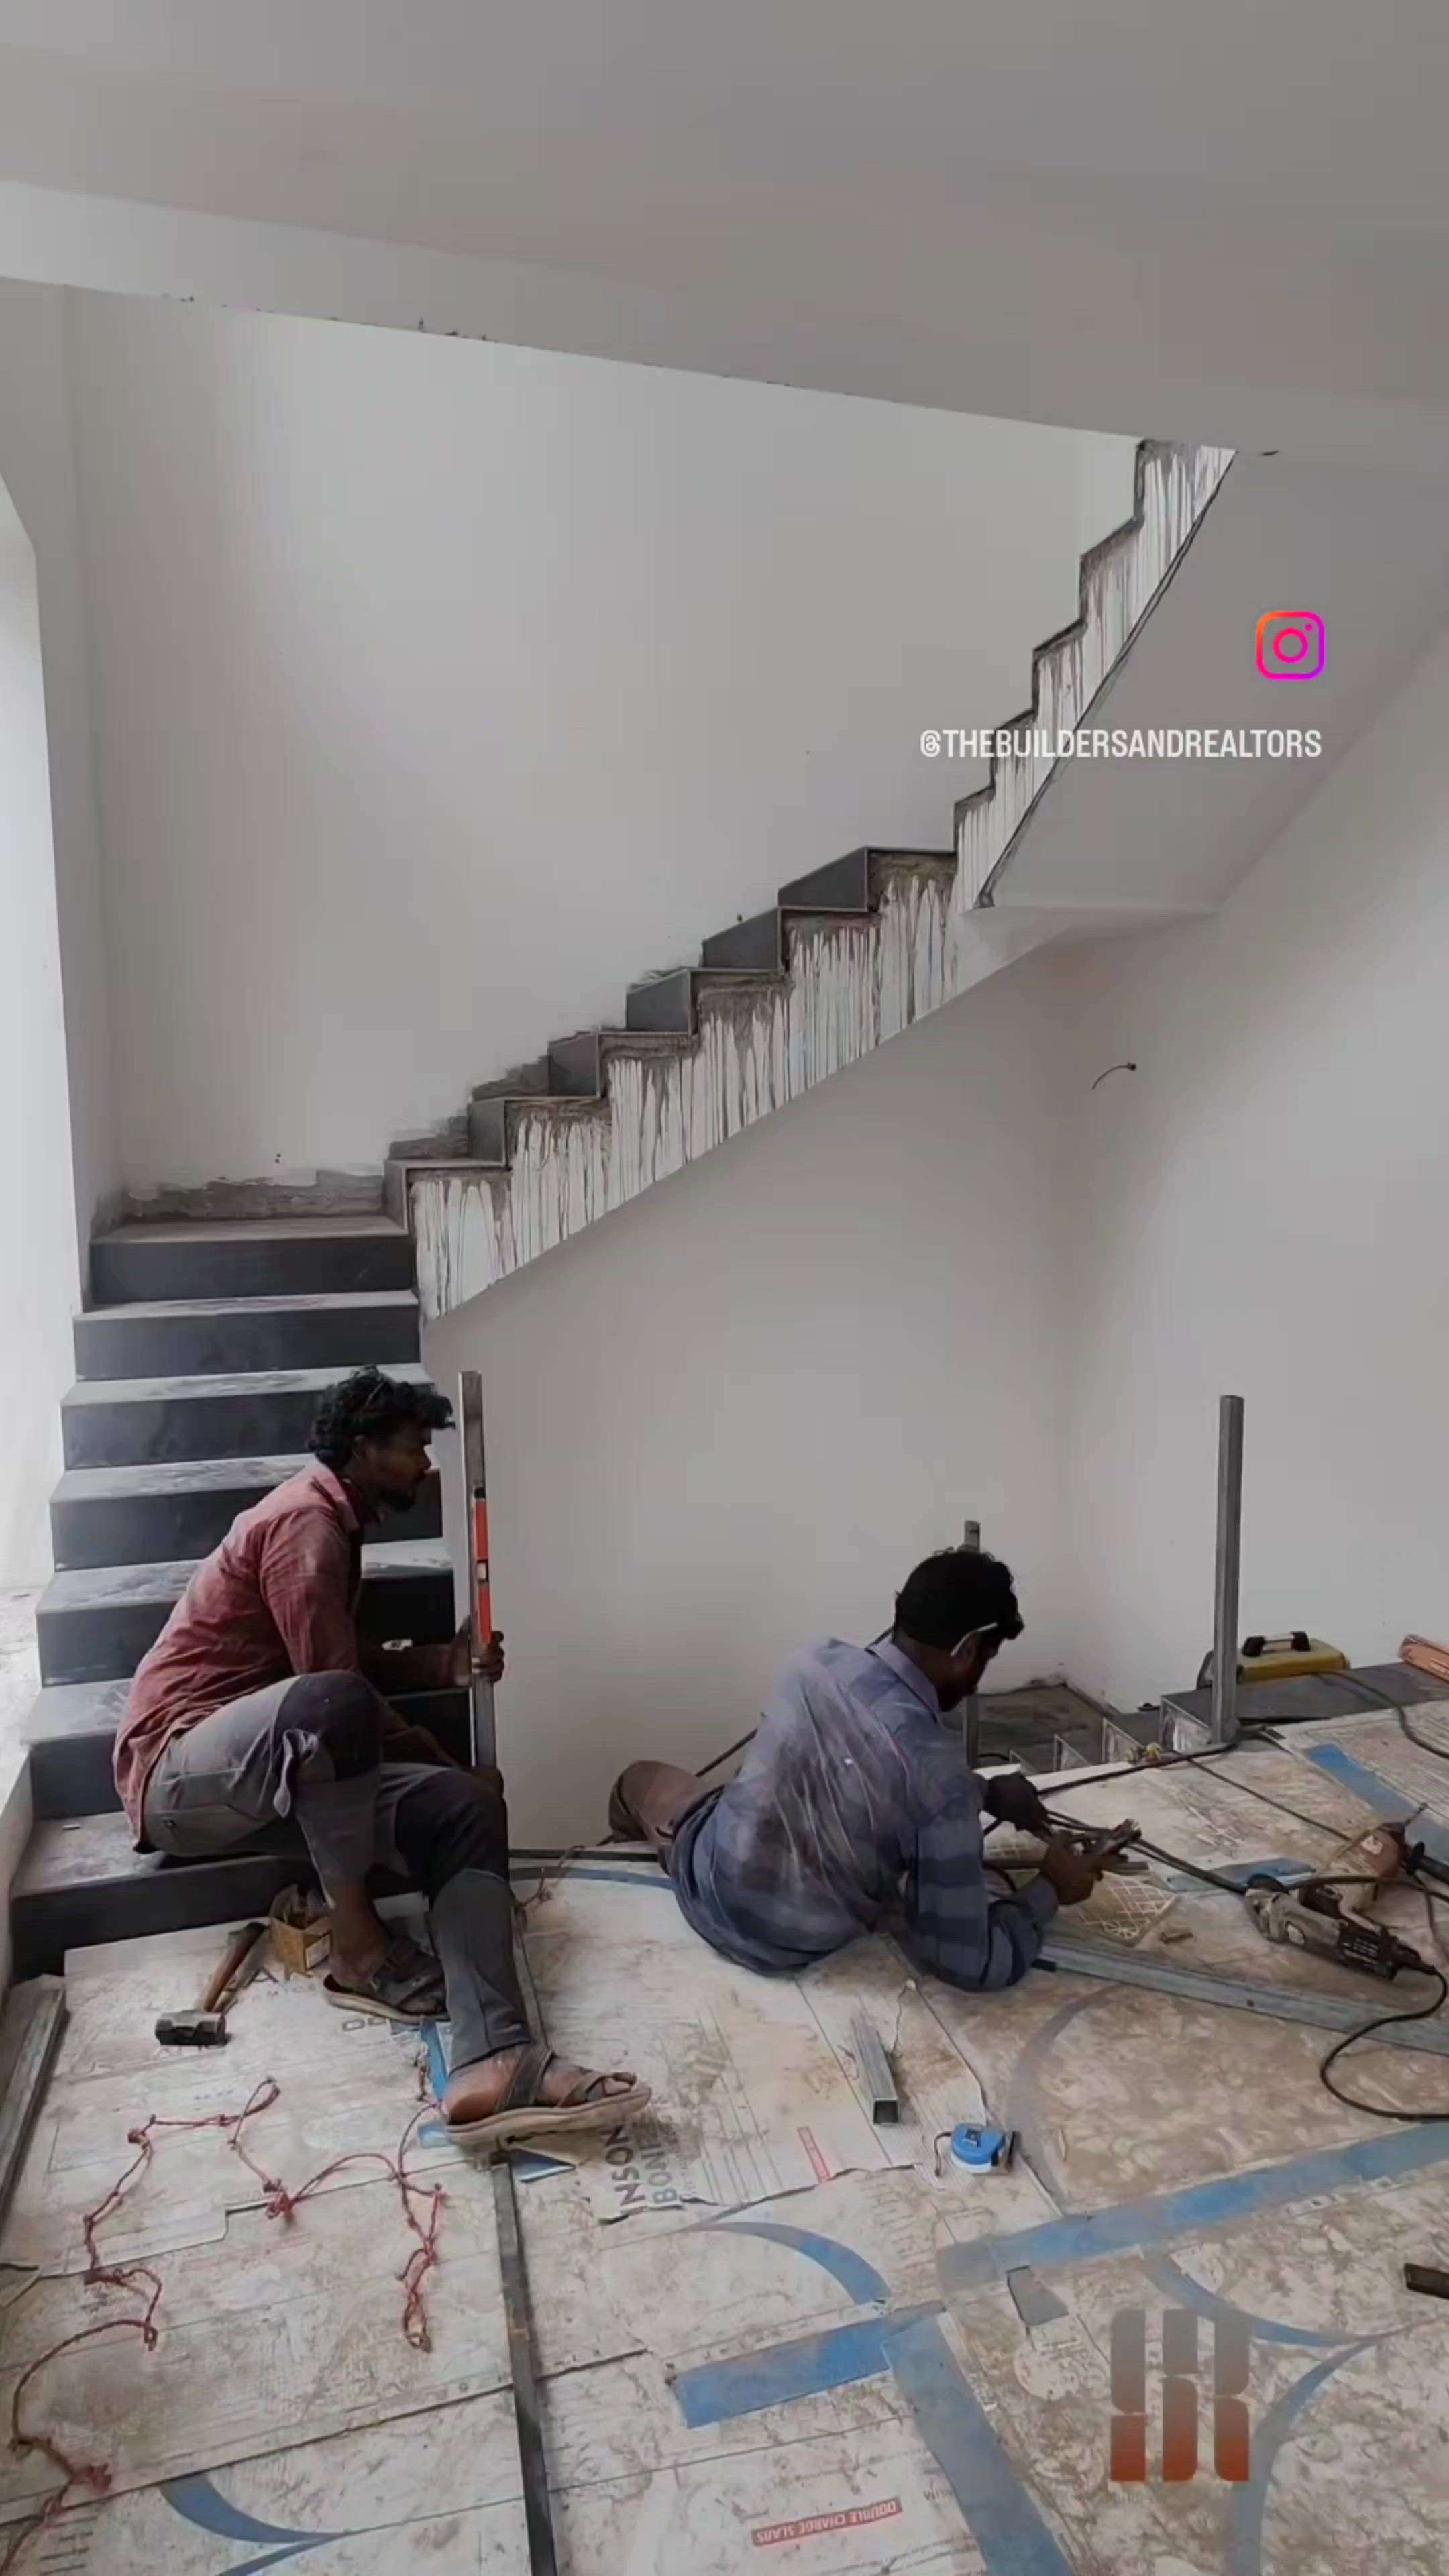 #designedbycivilengineer #InteriorDesigner #StaircaseDecors #new_home #homeinterior #CivilEngineer #architecturedesigns #Architect #HouseDesigns #jaliwork #ContemporaryHouse #ContemporaryDesigns #tbt❤️ #LUXURY_INTERIOR #KeralaStyleHouse